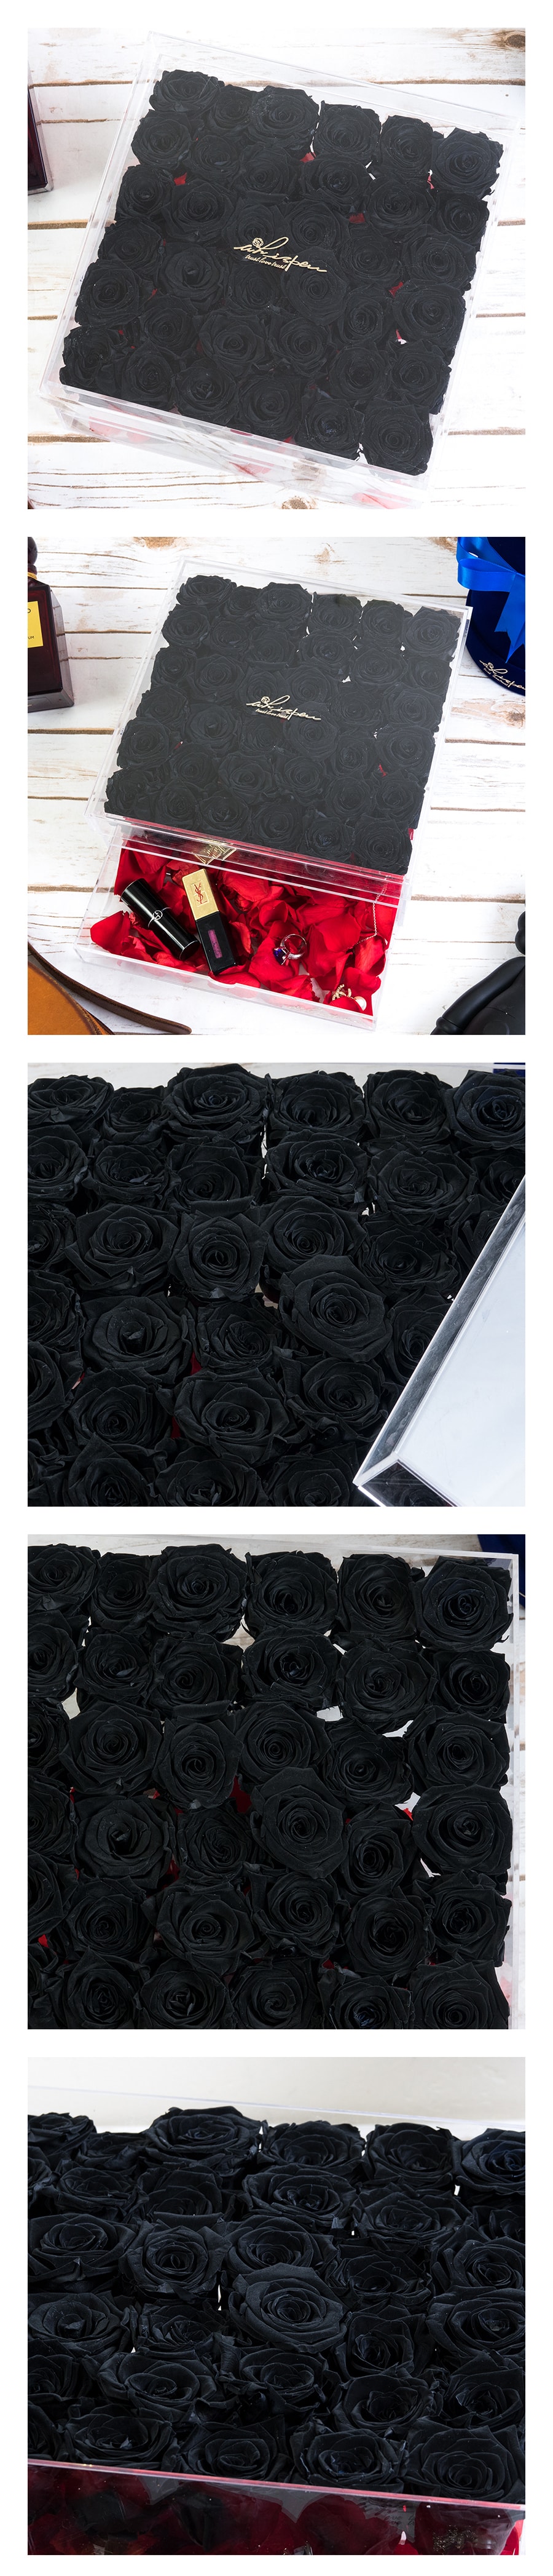 whisper bouquet preserved roses Makeup storage box (Black roses)